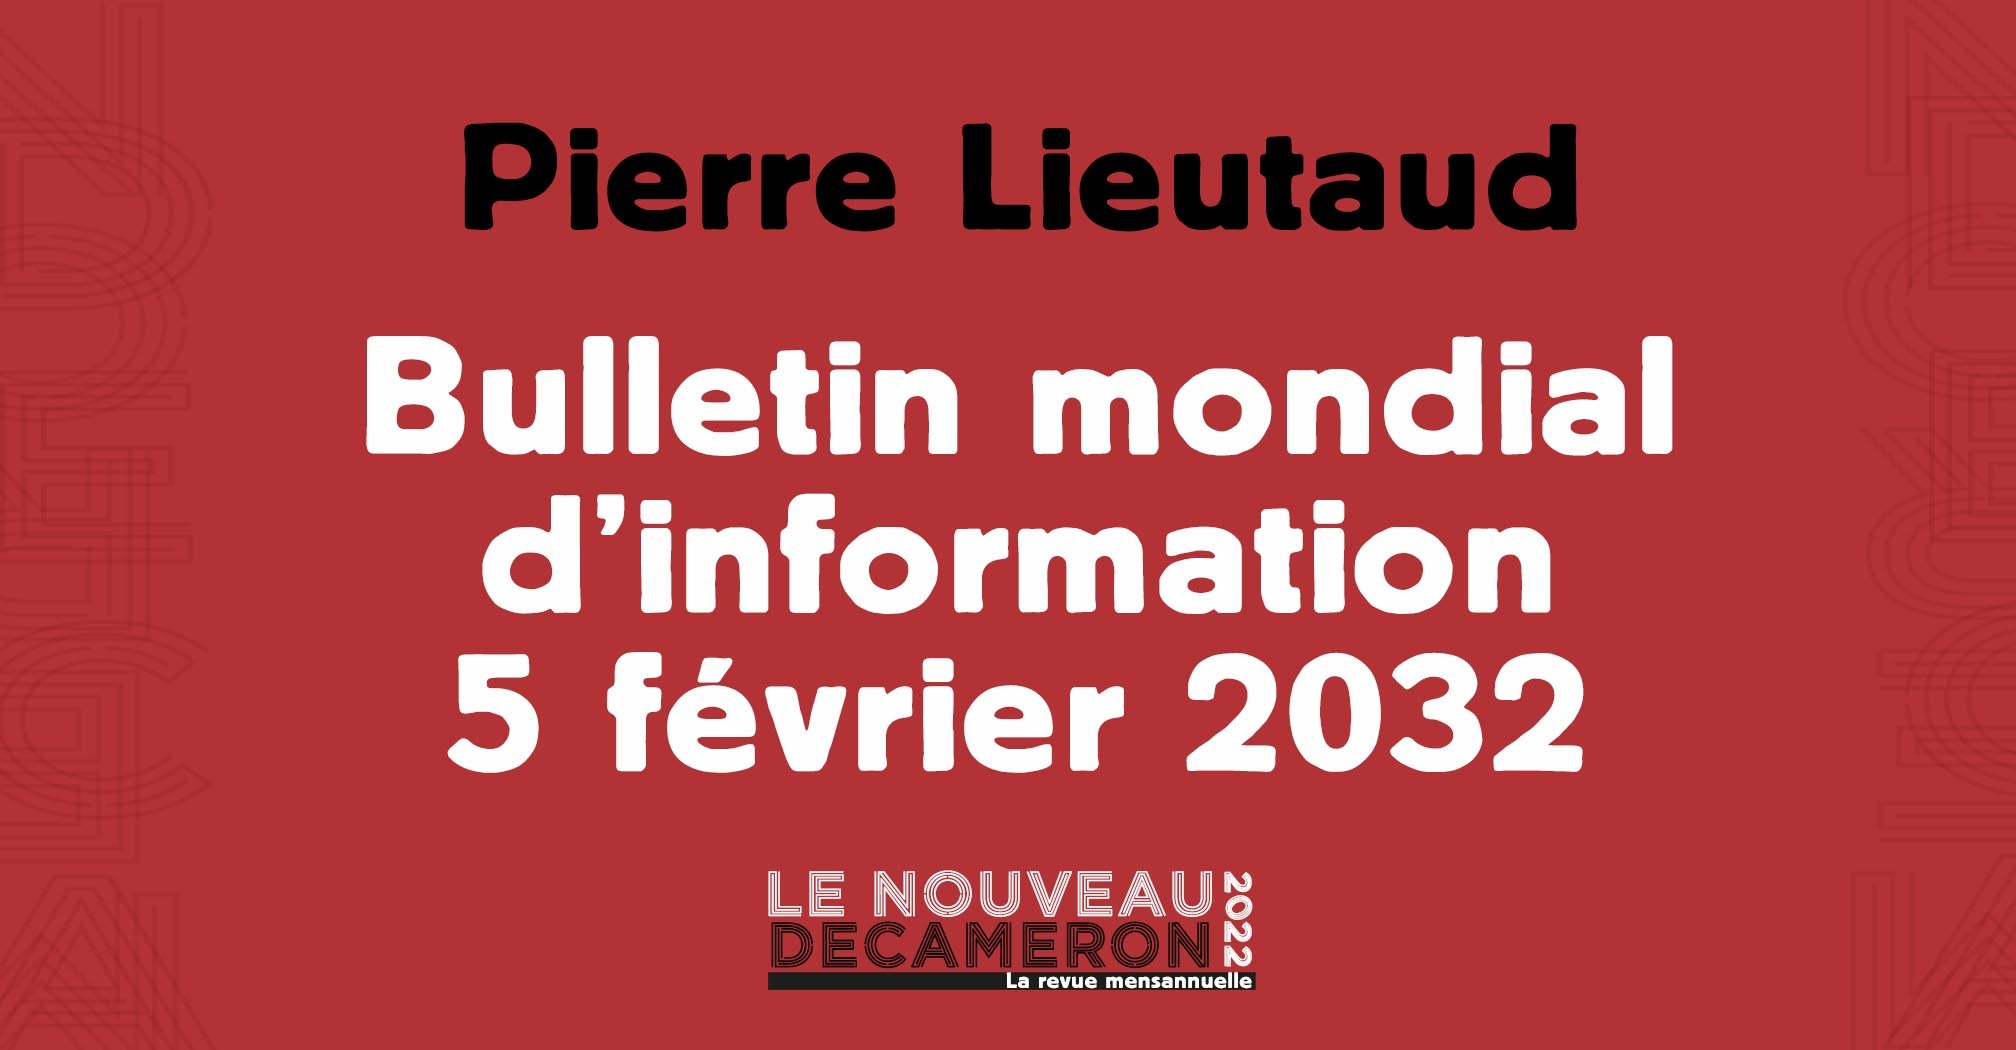 Pierre Lieutaud - Bulletin mondial d’information - 5 février 2032